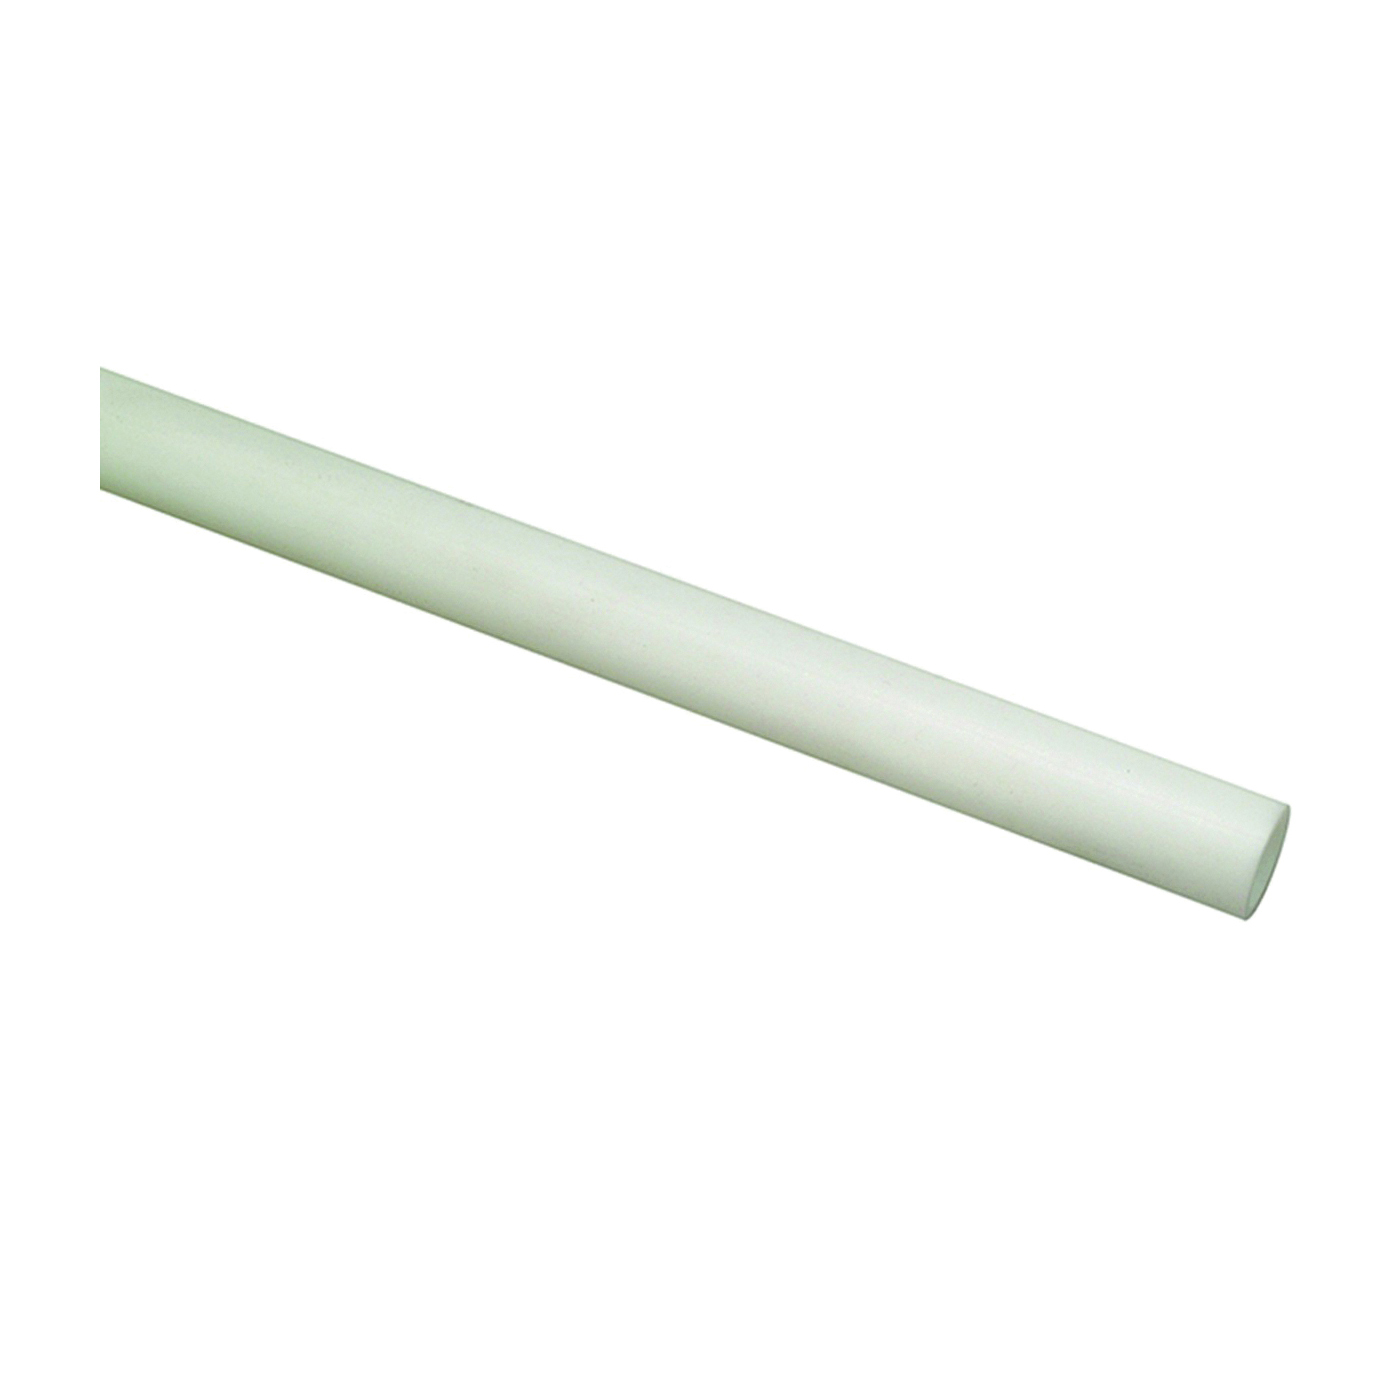 APPW534 PEX-B Pipe Tubing, 3/4 in, White, 5 ft L